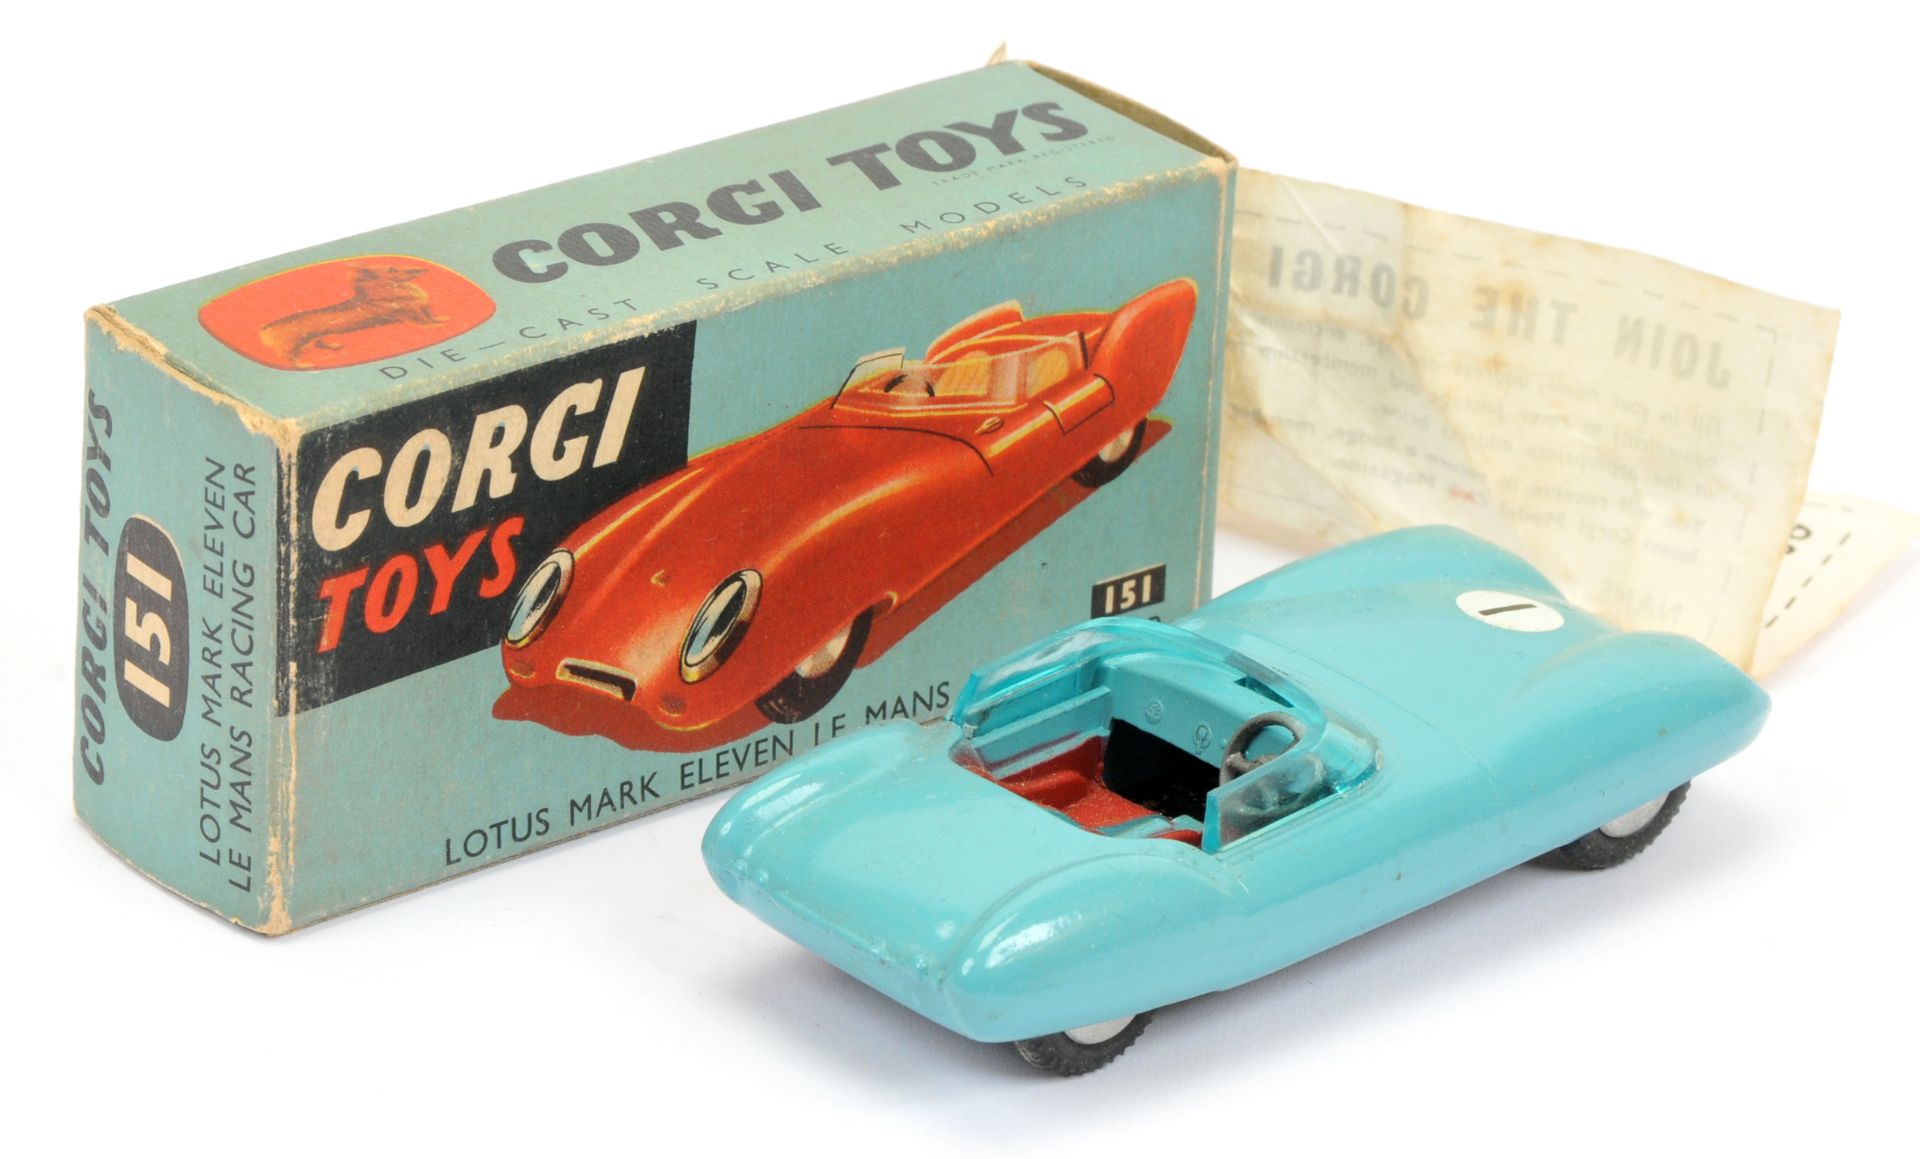 Corgi Toys 151 Lotus Mark 11 Le Mans Racing car - Drab light blue, red seats, silver trim - Image 2 of 2